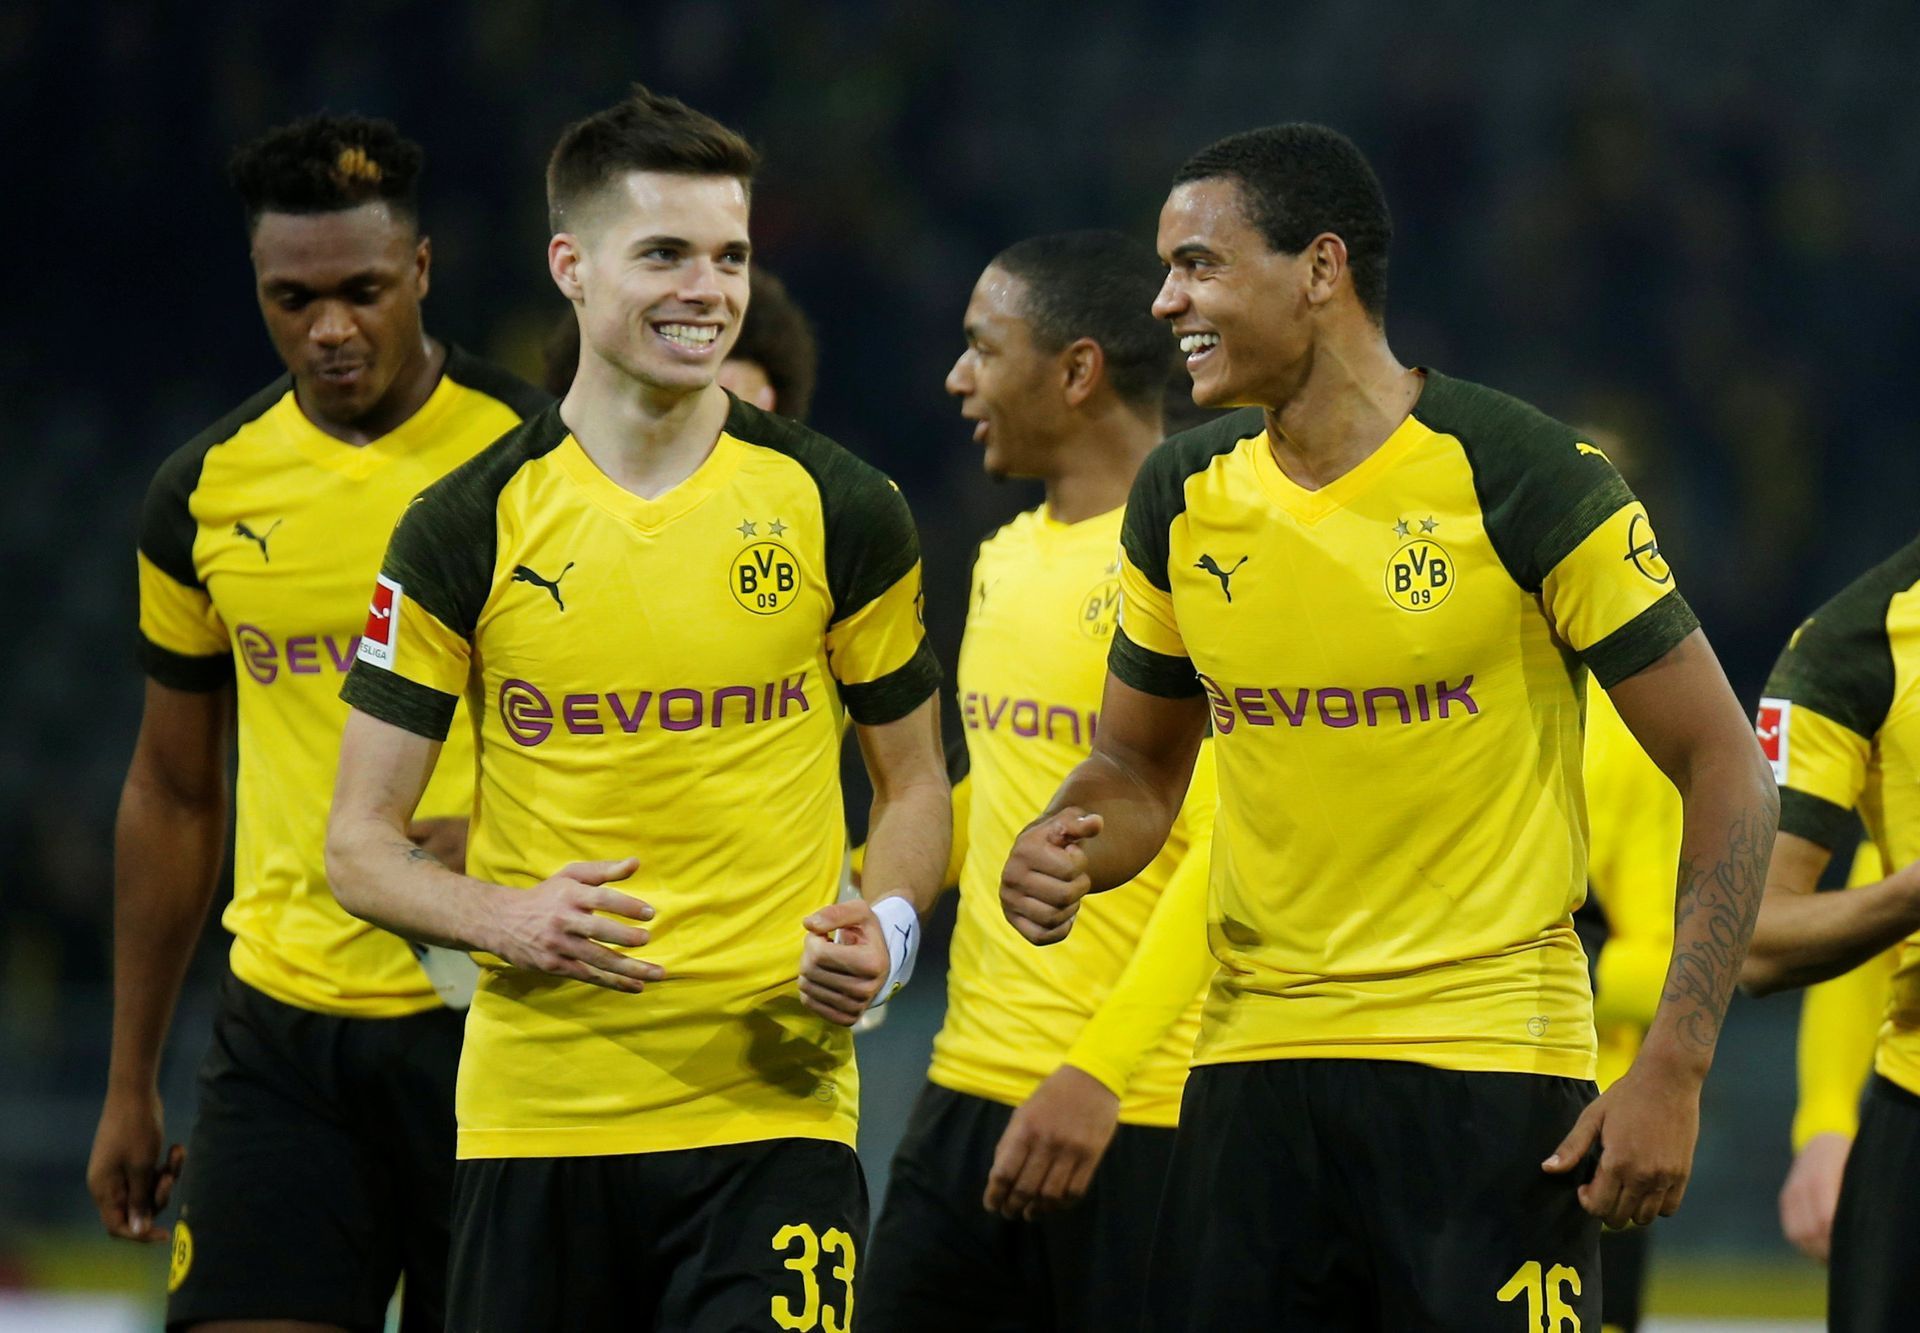 Německá fotbalová liga 2018/19, Dortmund - Leverkusen: Radost fotbalistů Dortmundu